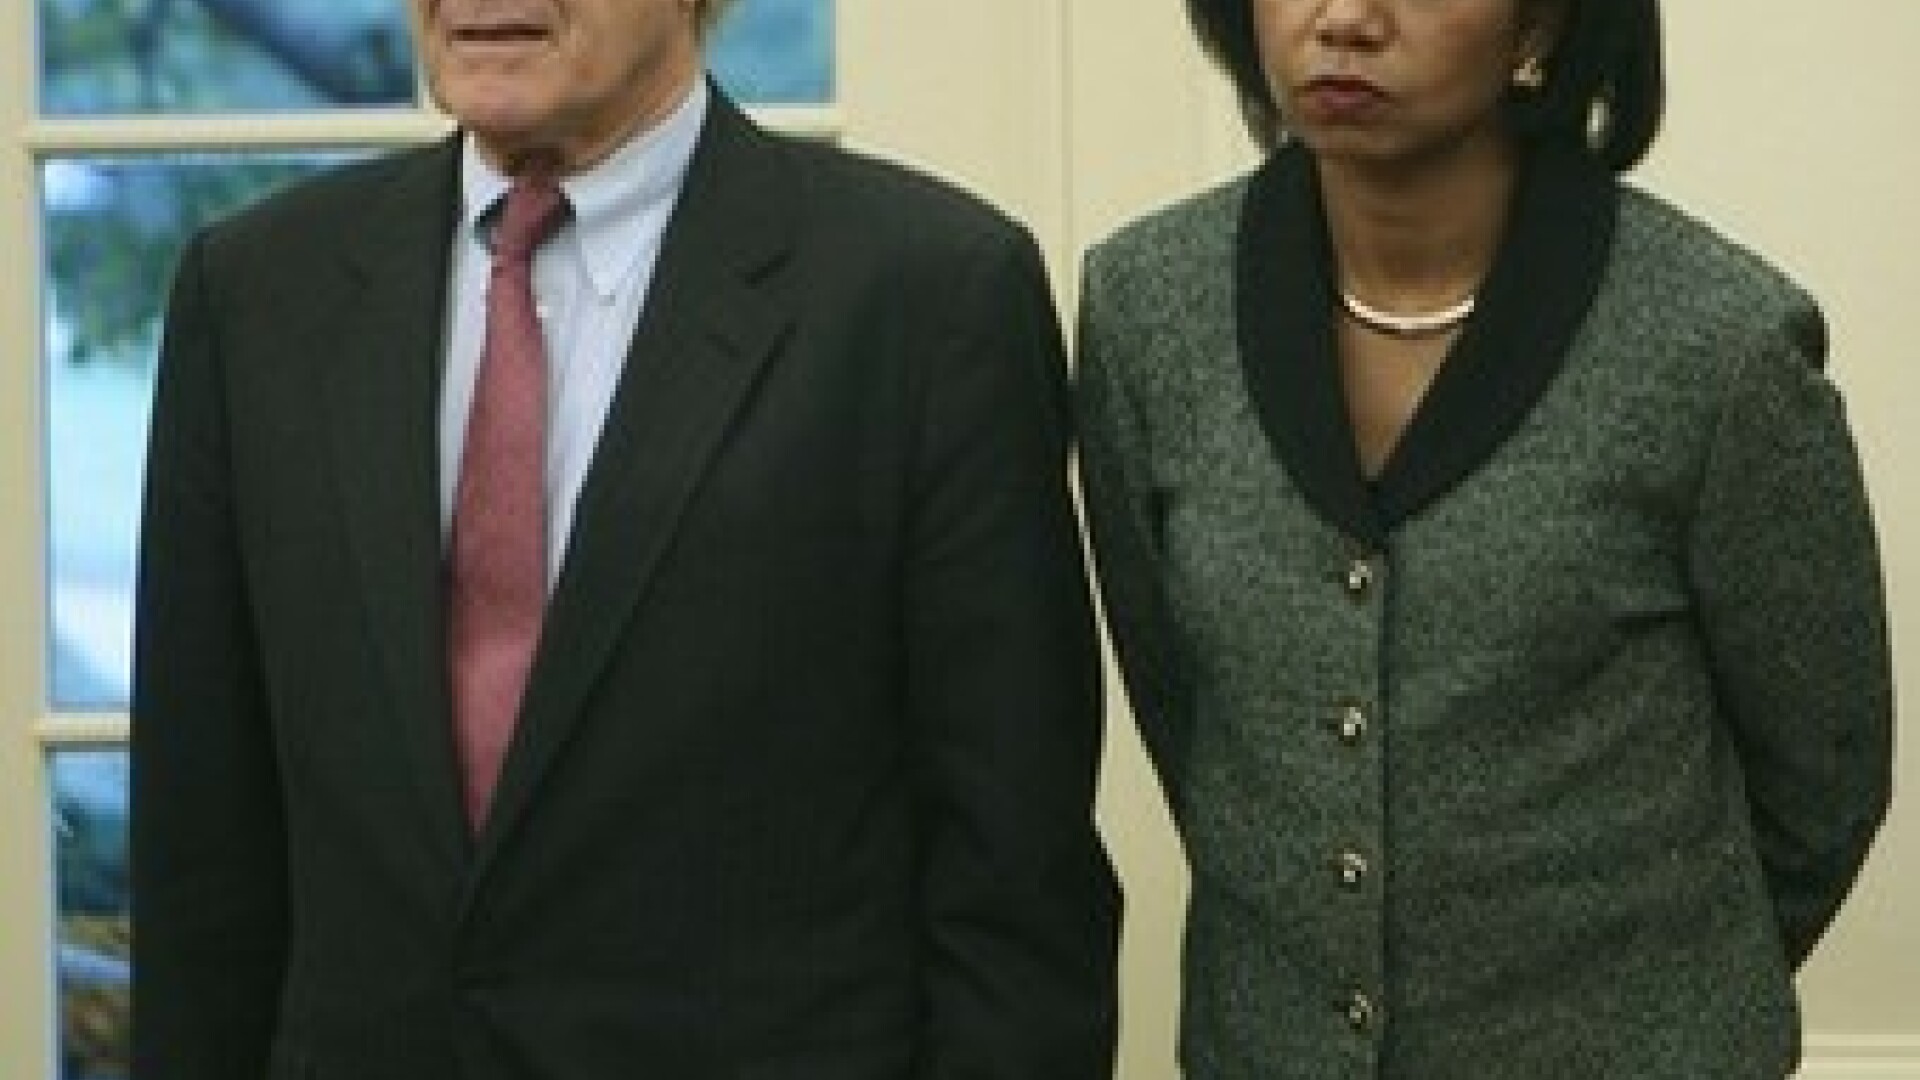 Condoleeezza Rice